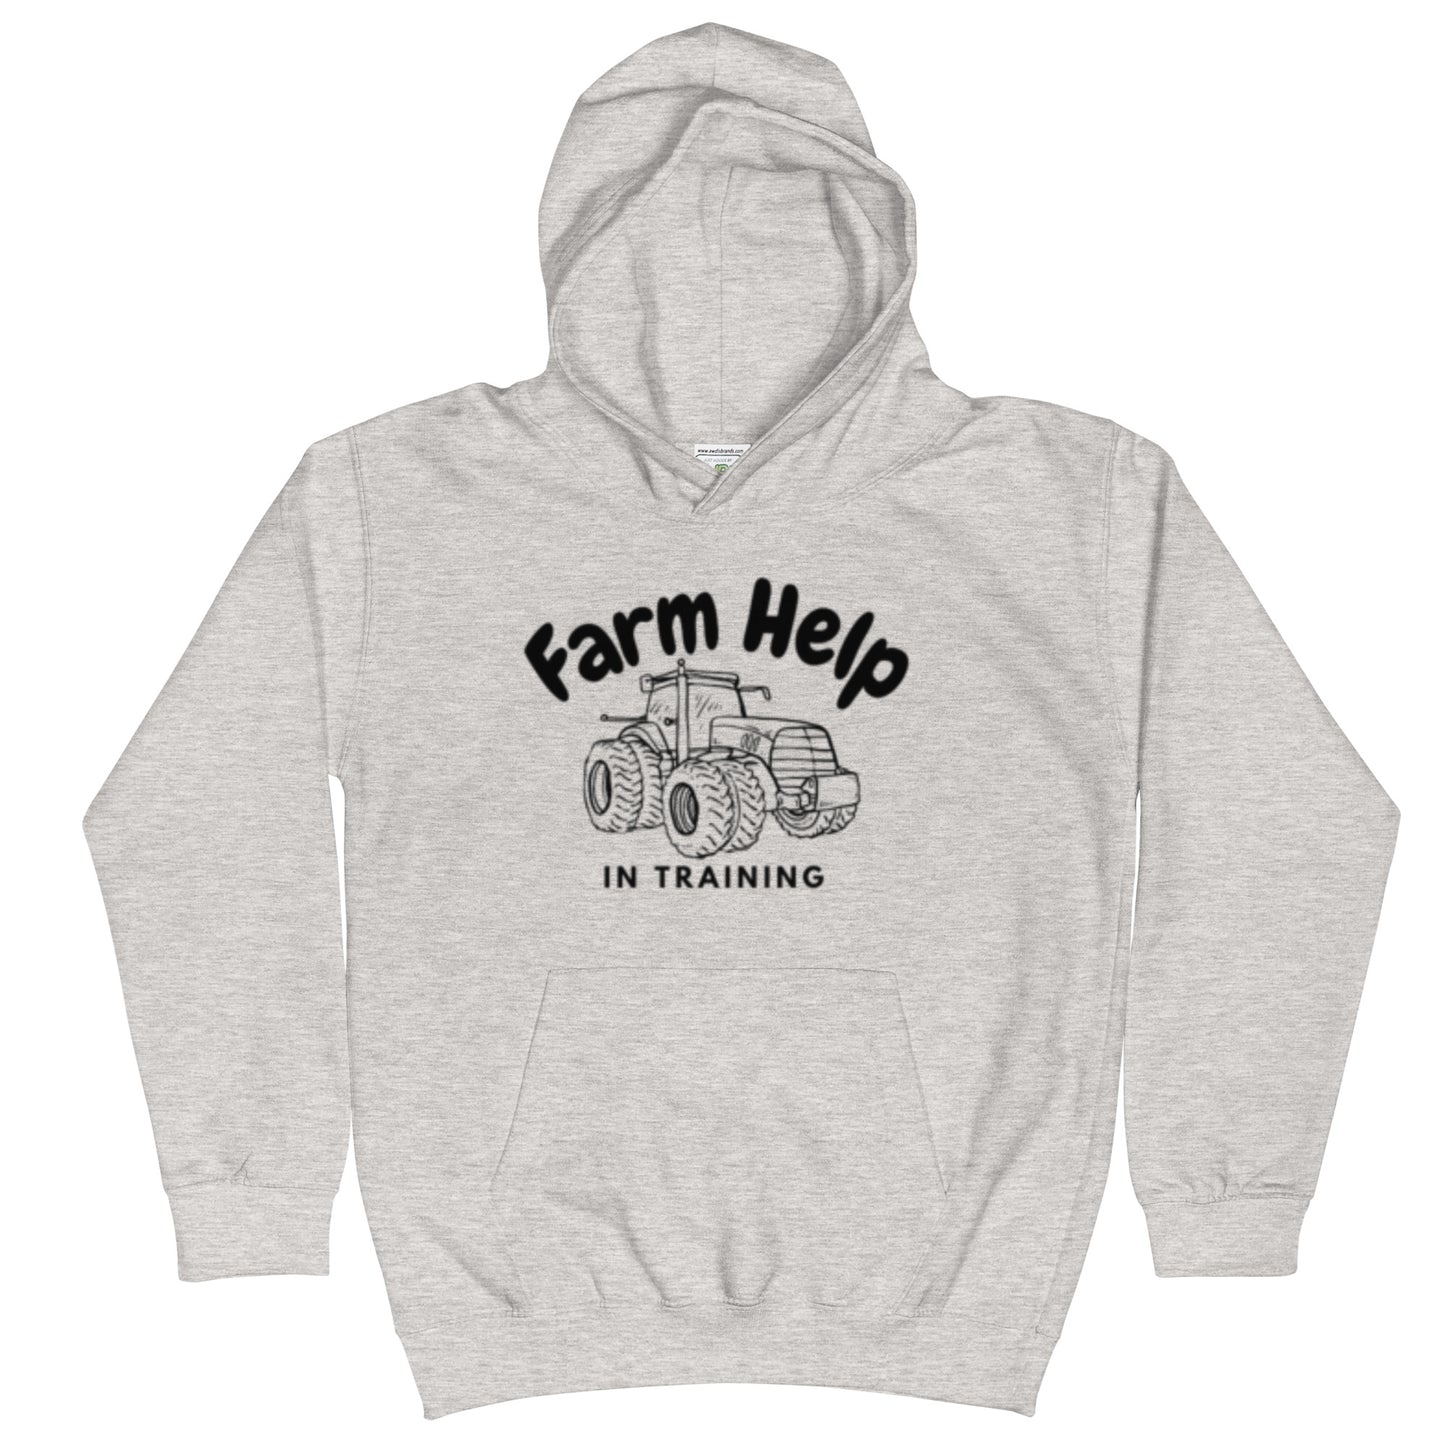 YOUTH HOODIE- FARM HELP